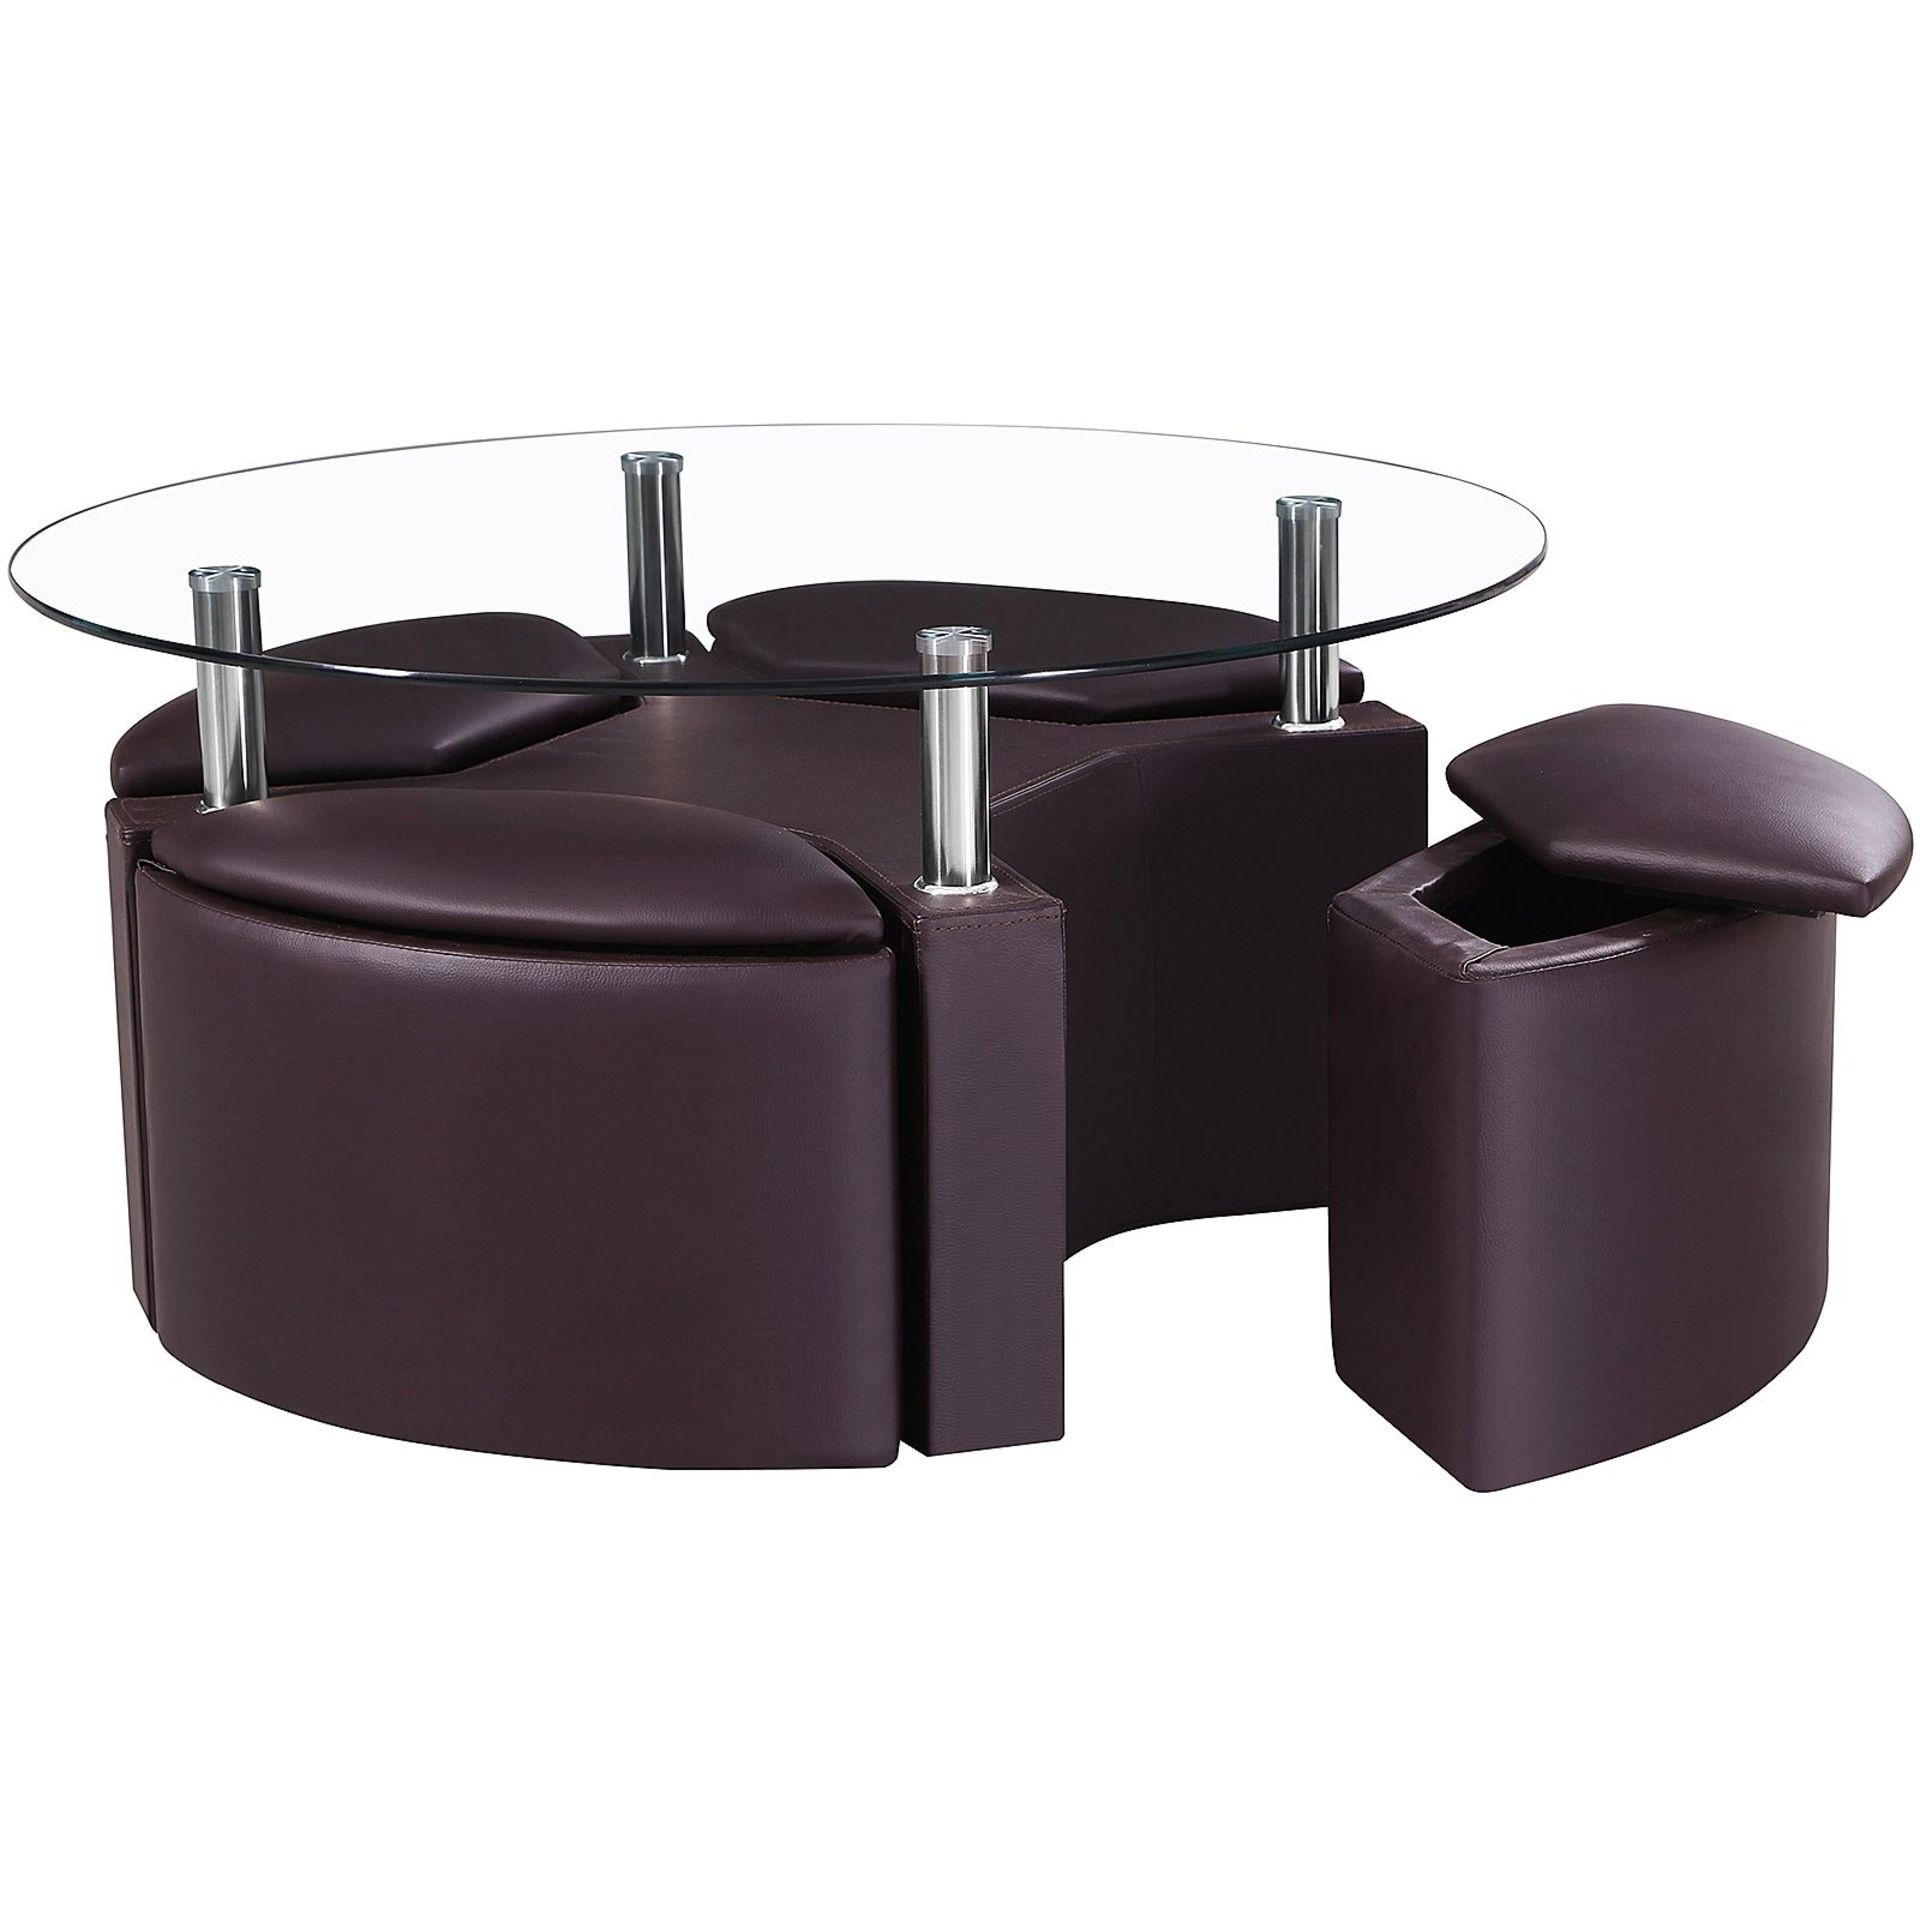 1 x Dakota Round Coffee Table with 4 Ottoman Storage Stools - Colour: BROWN - CL112 - Location: